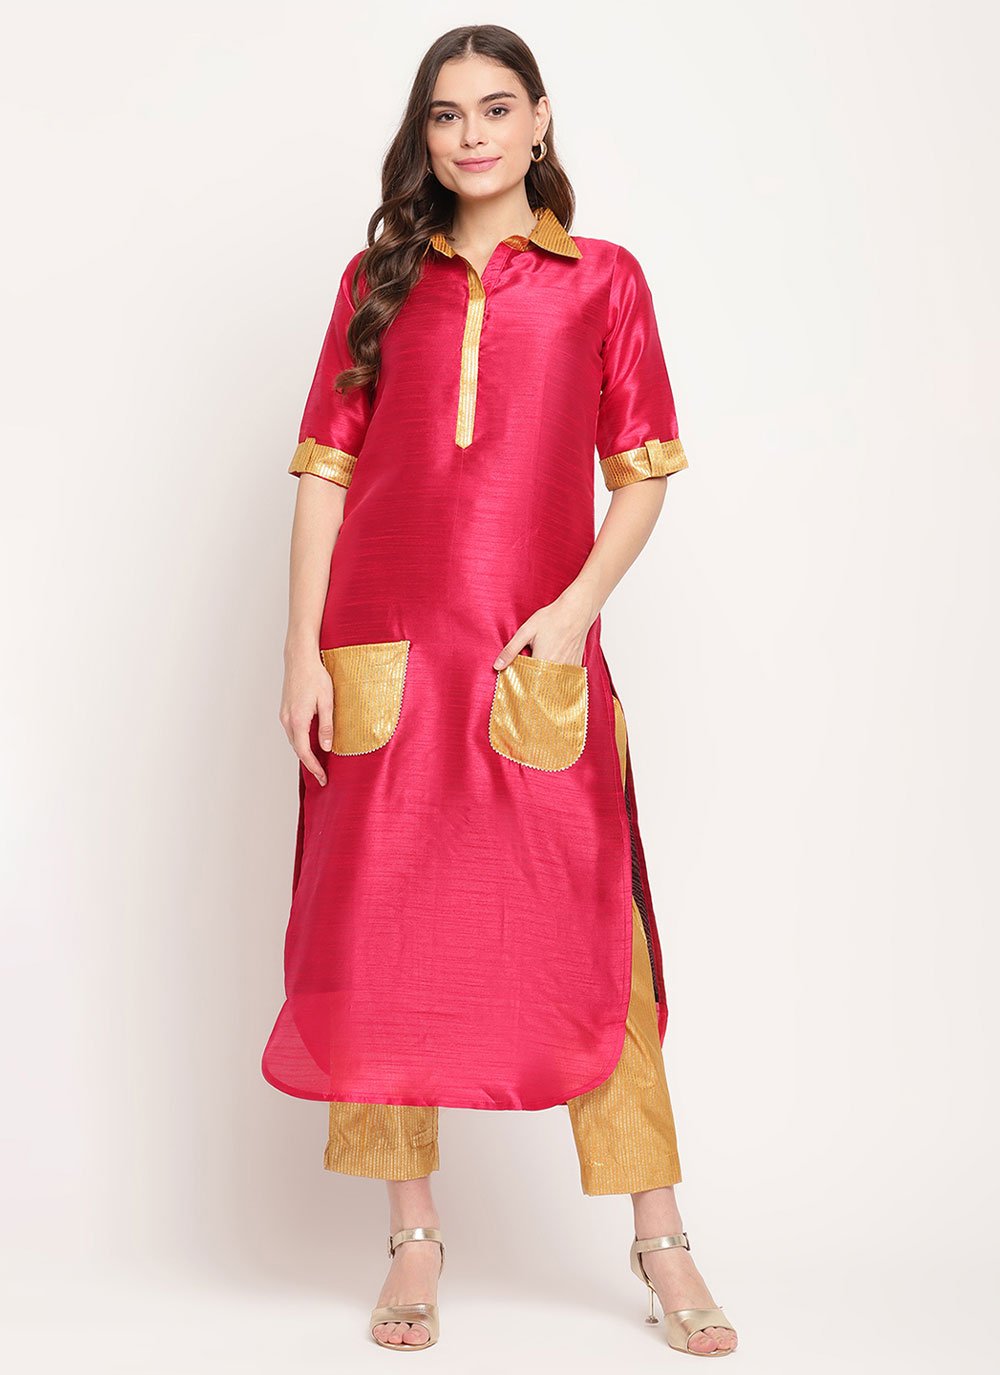 Stitched Ladies Pink Plain Rayon Kurti at Rs 200 in Jaipur | ID: 25167549430